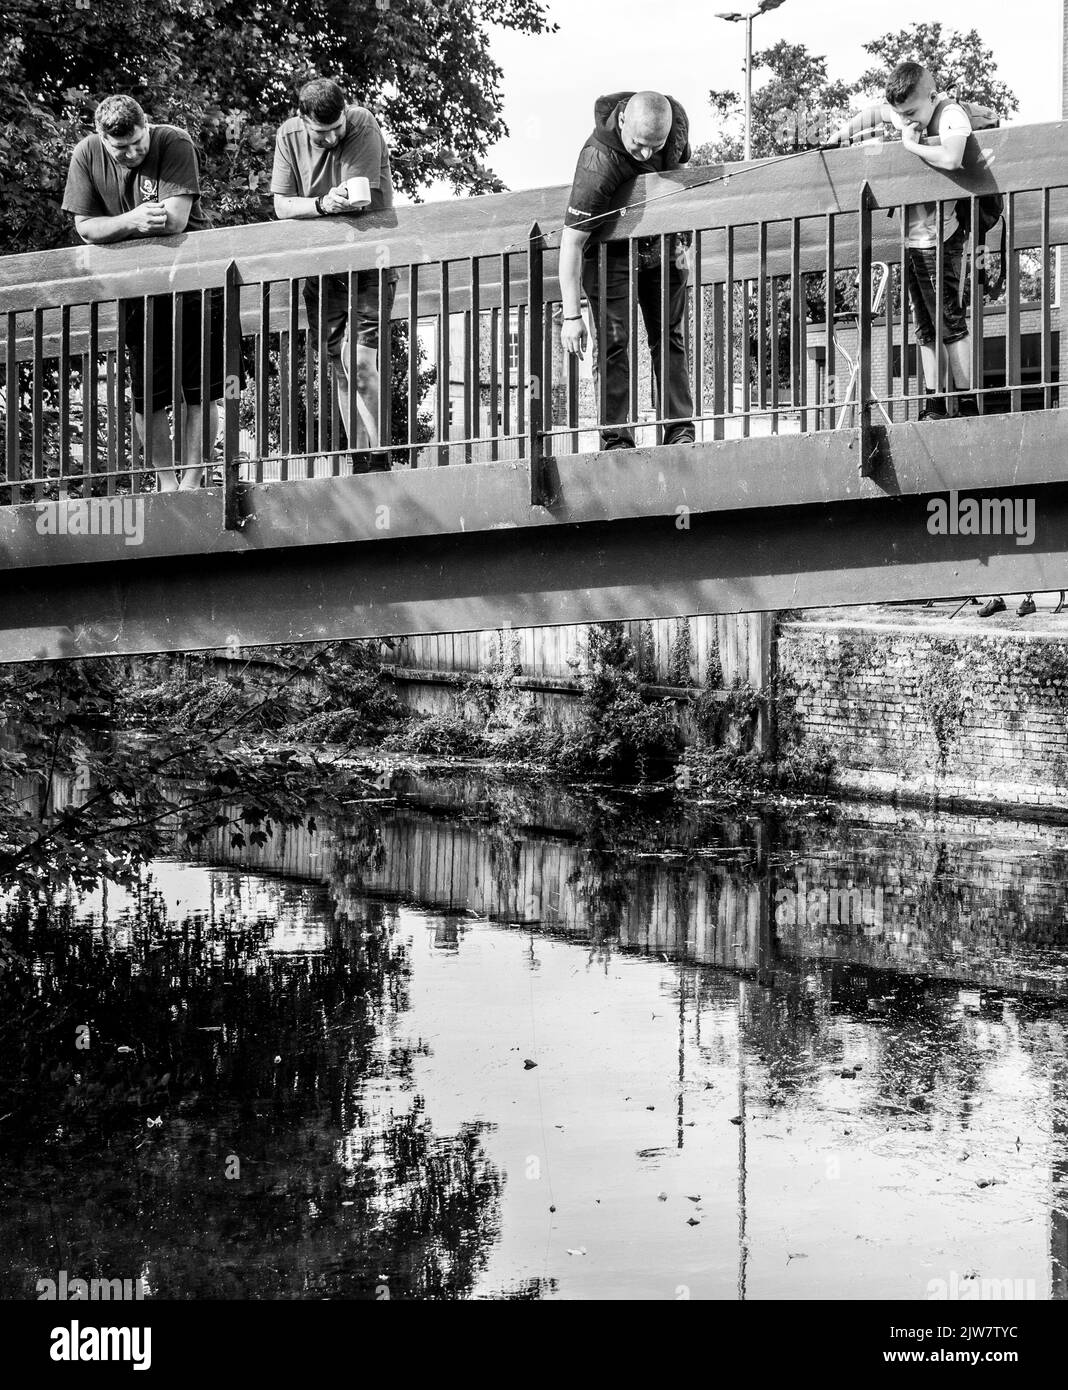 Fishing off a bridge, three men and a boy, River Thet, Thetford Stock Photo